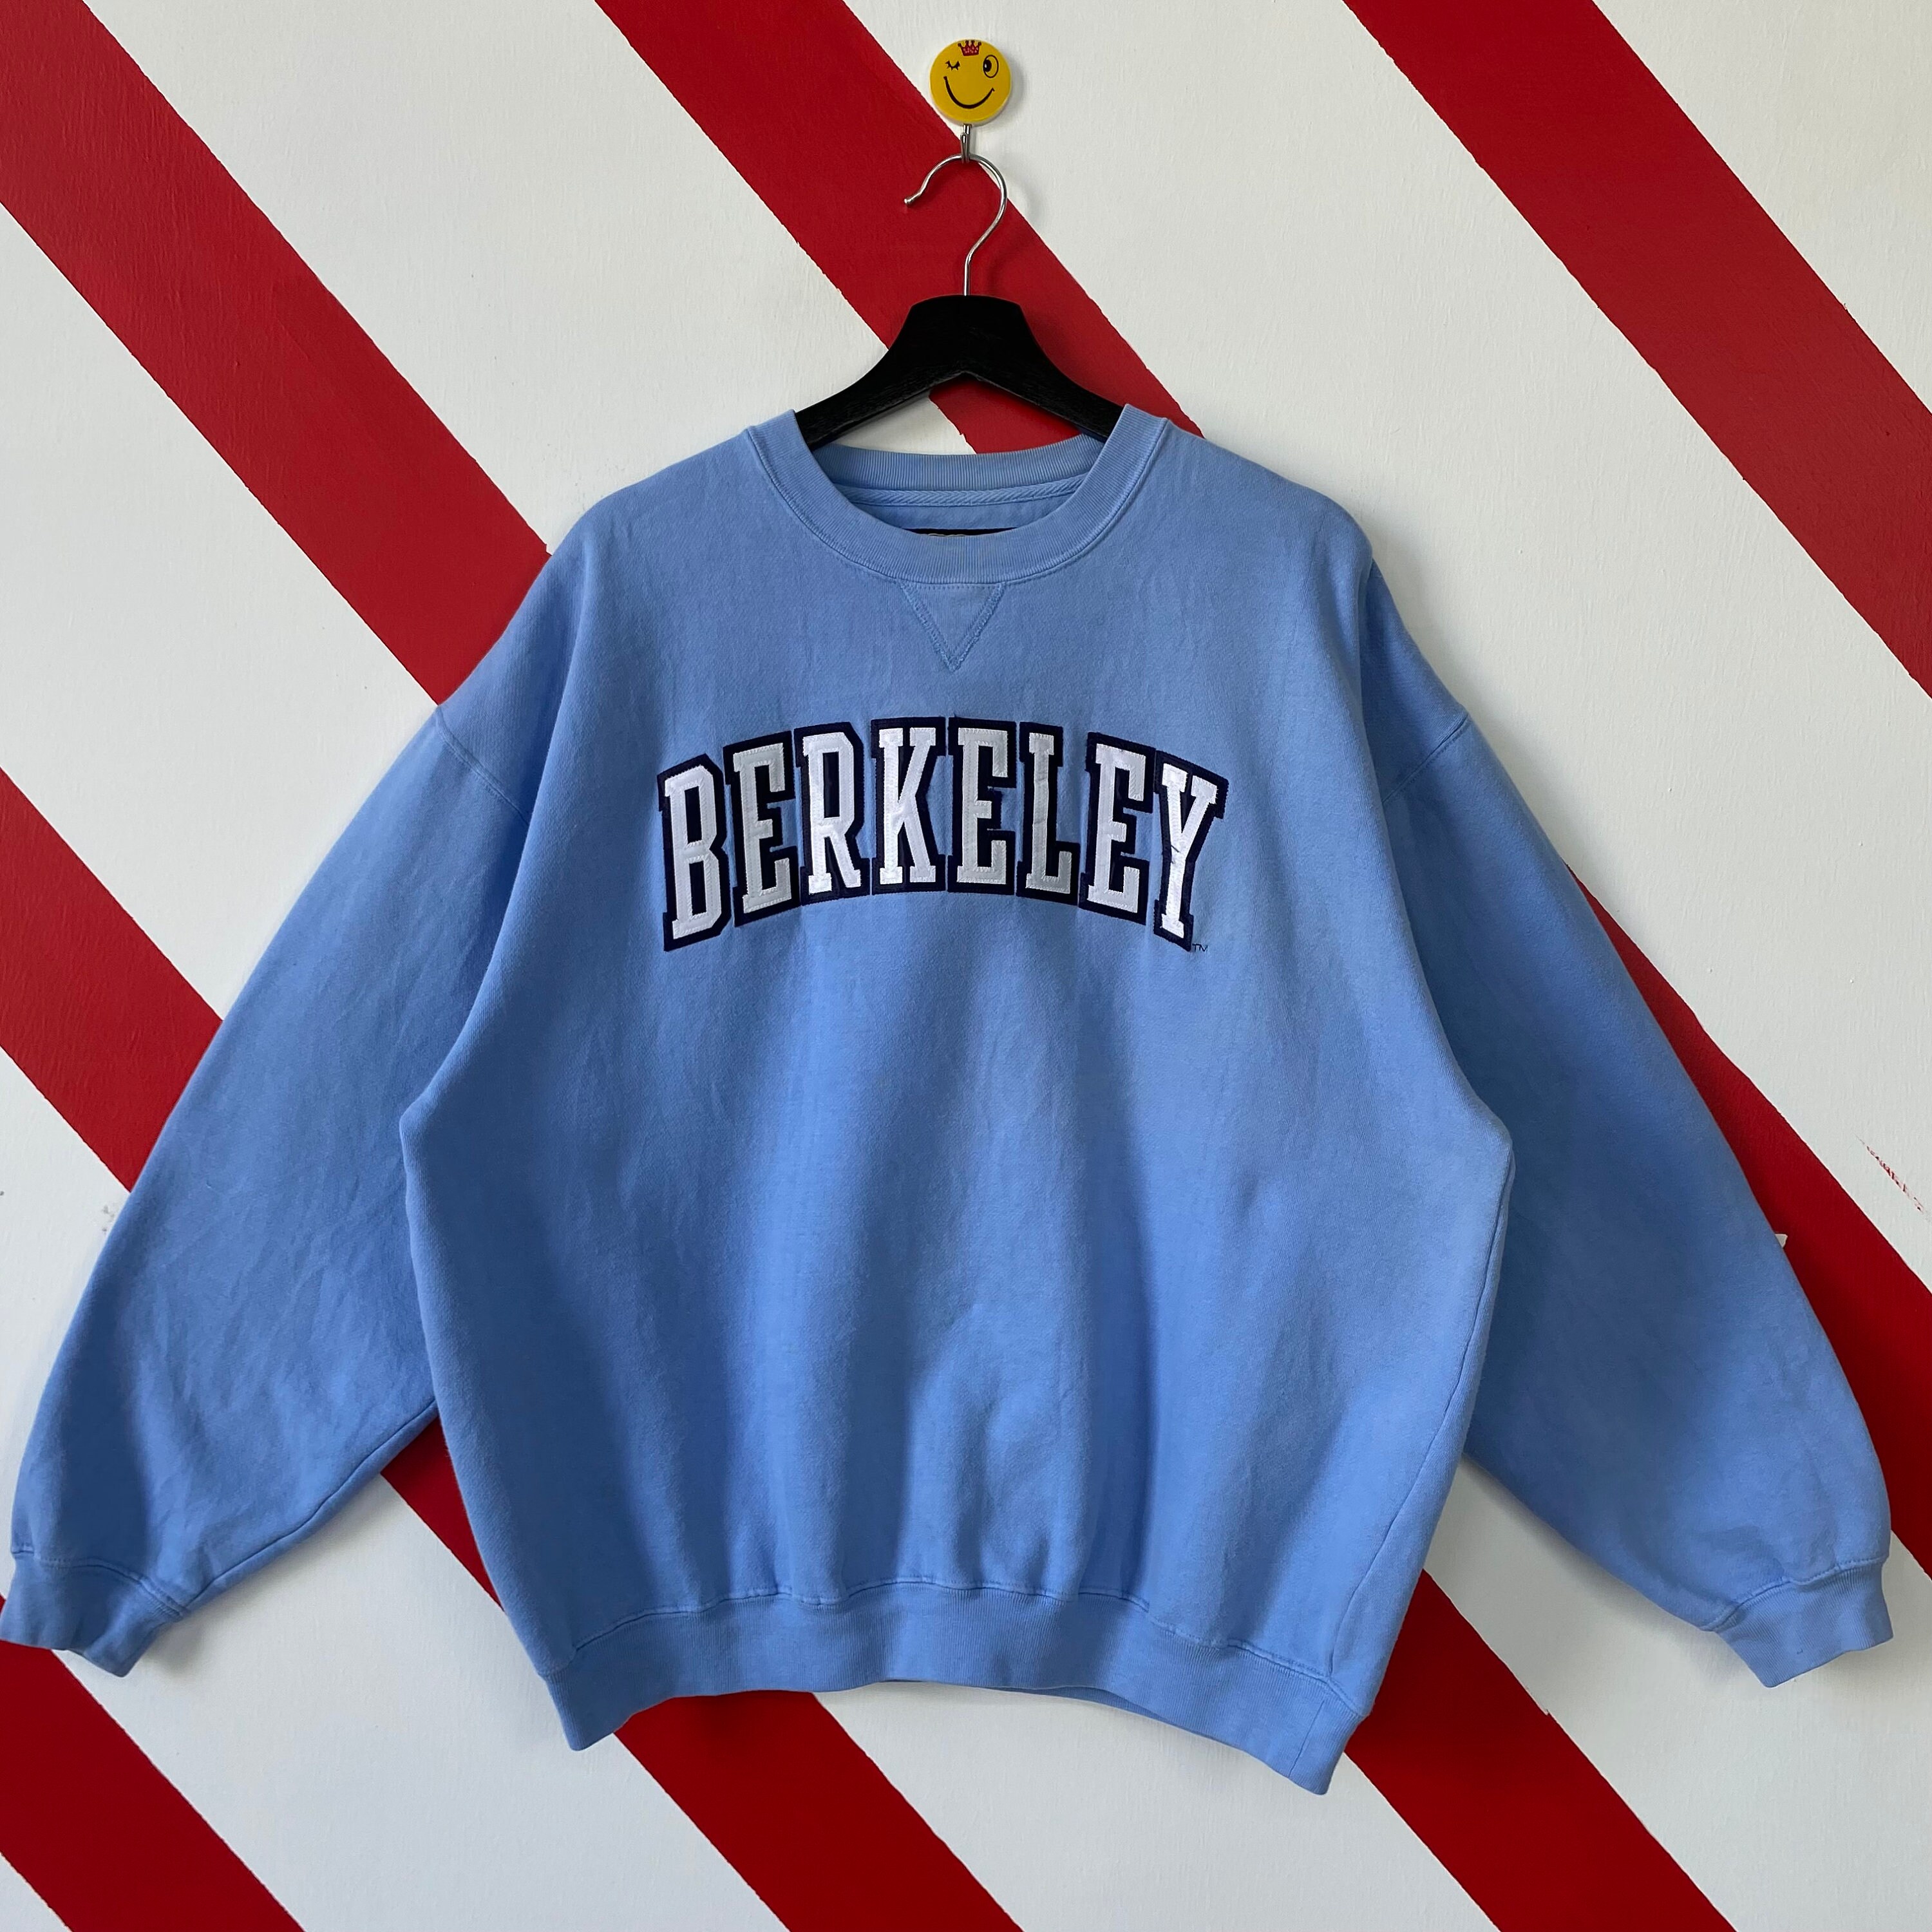 Vintage University California Berkeley Sweatshirt - Etsy Denmark